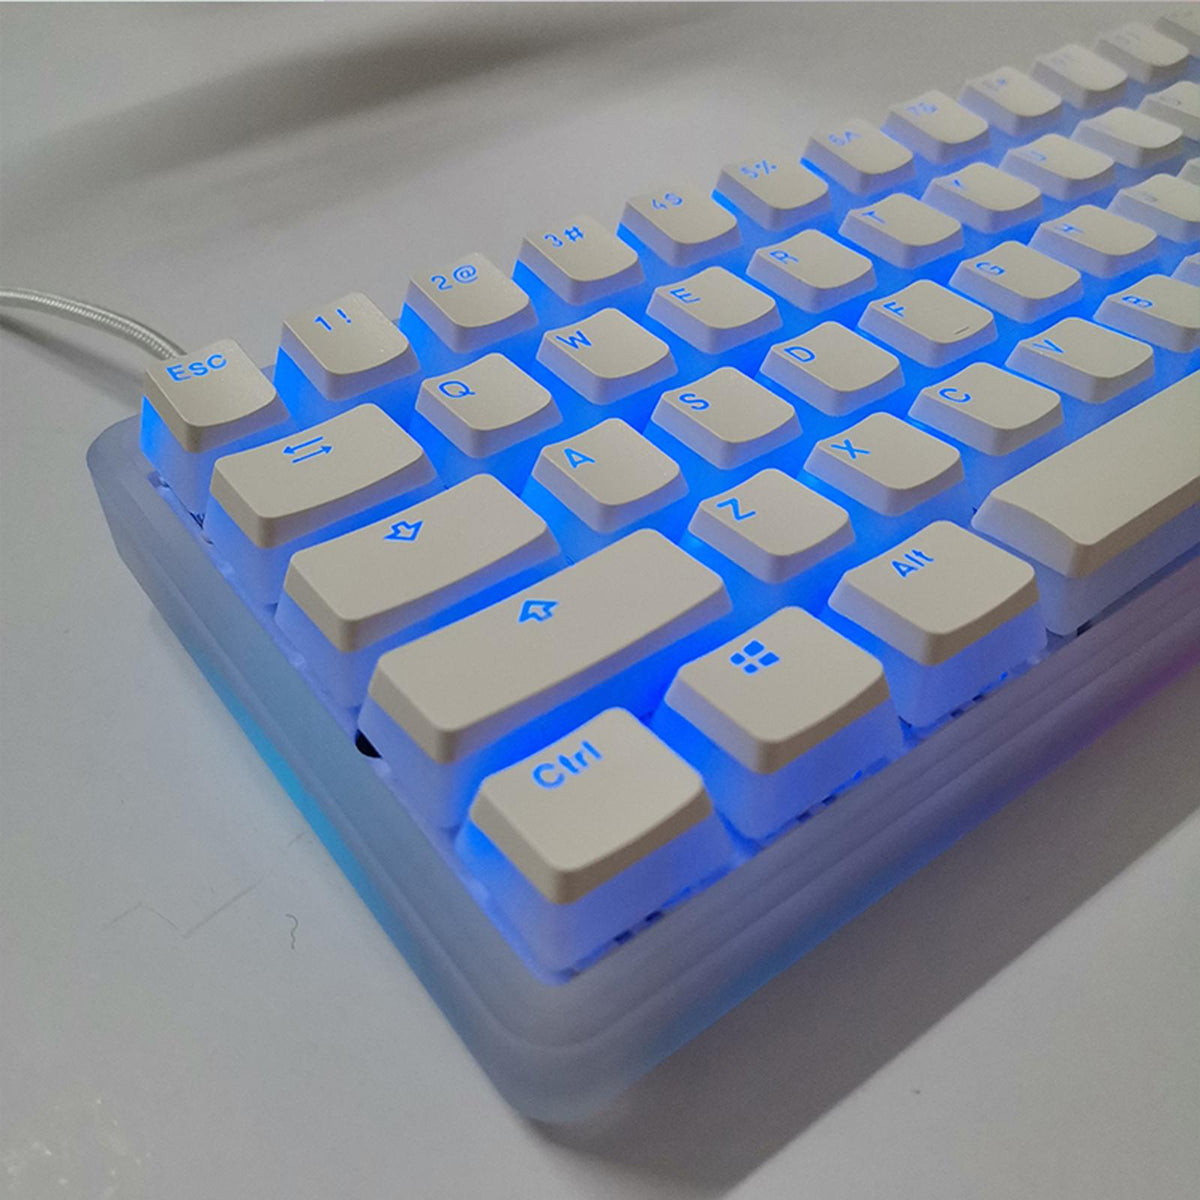 108 Keys Pudding Keycap Set For PC Gaming Mechanical Keyboard